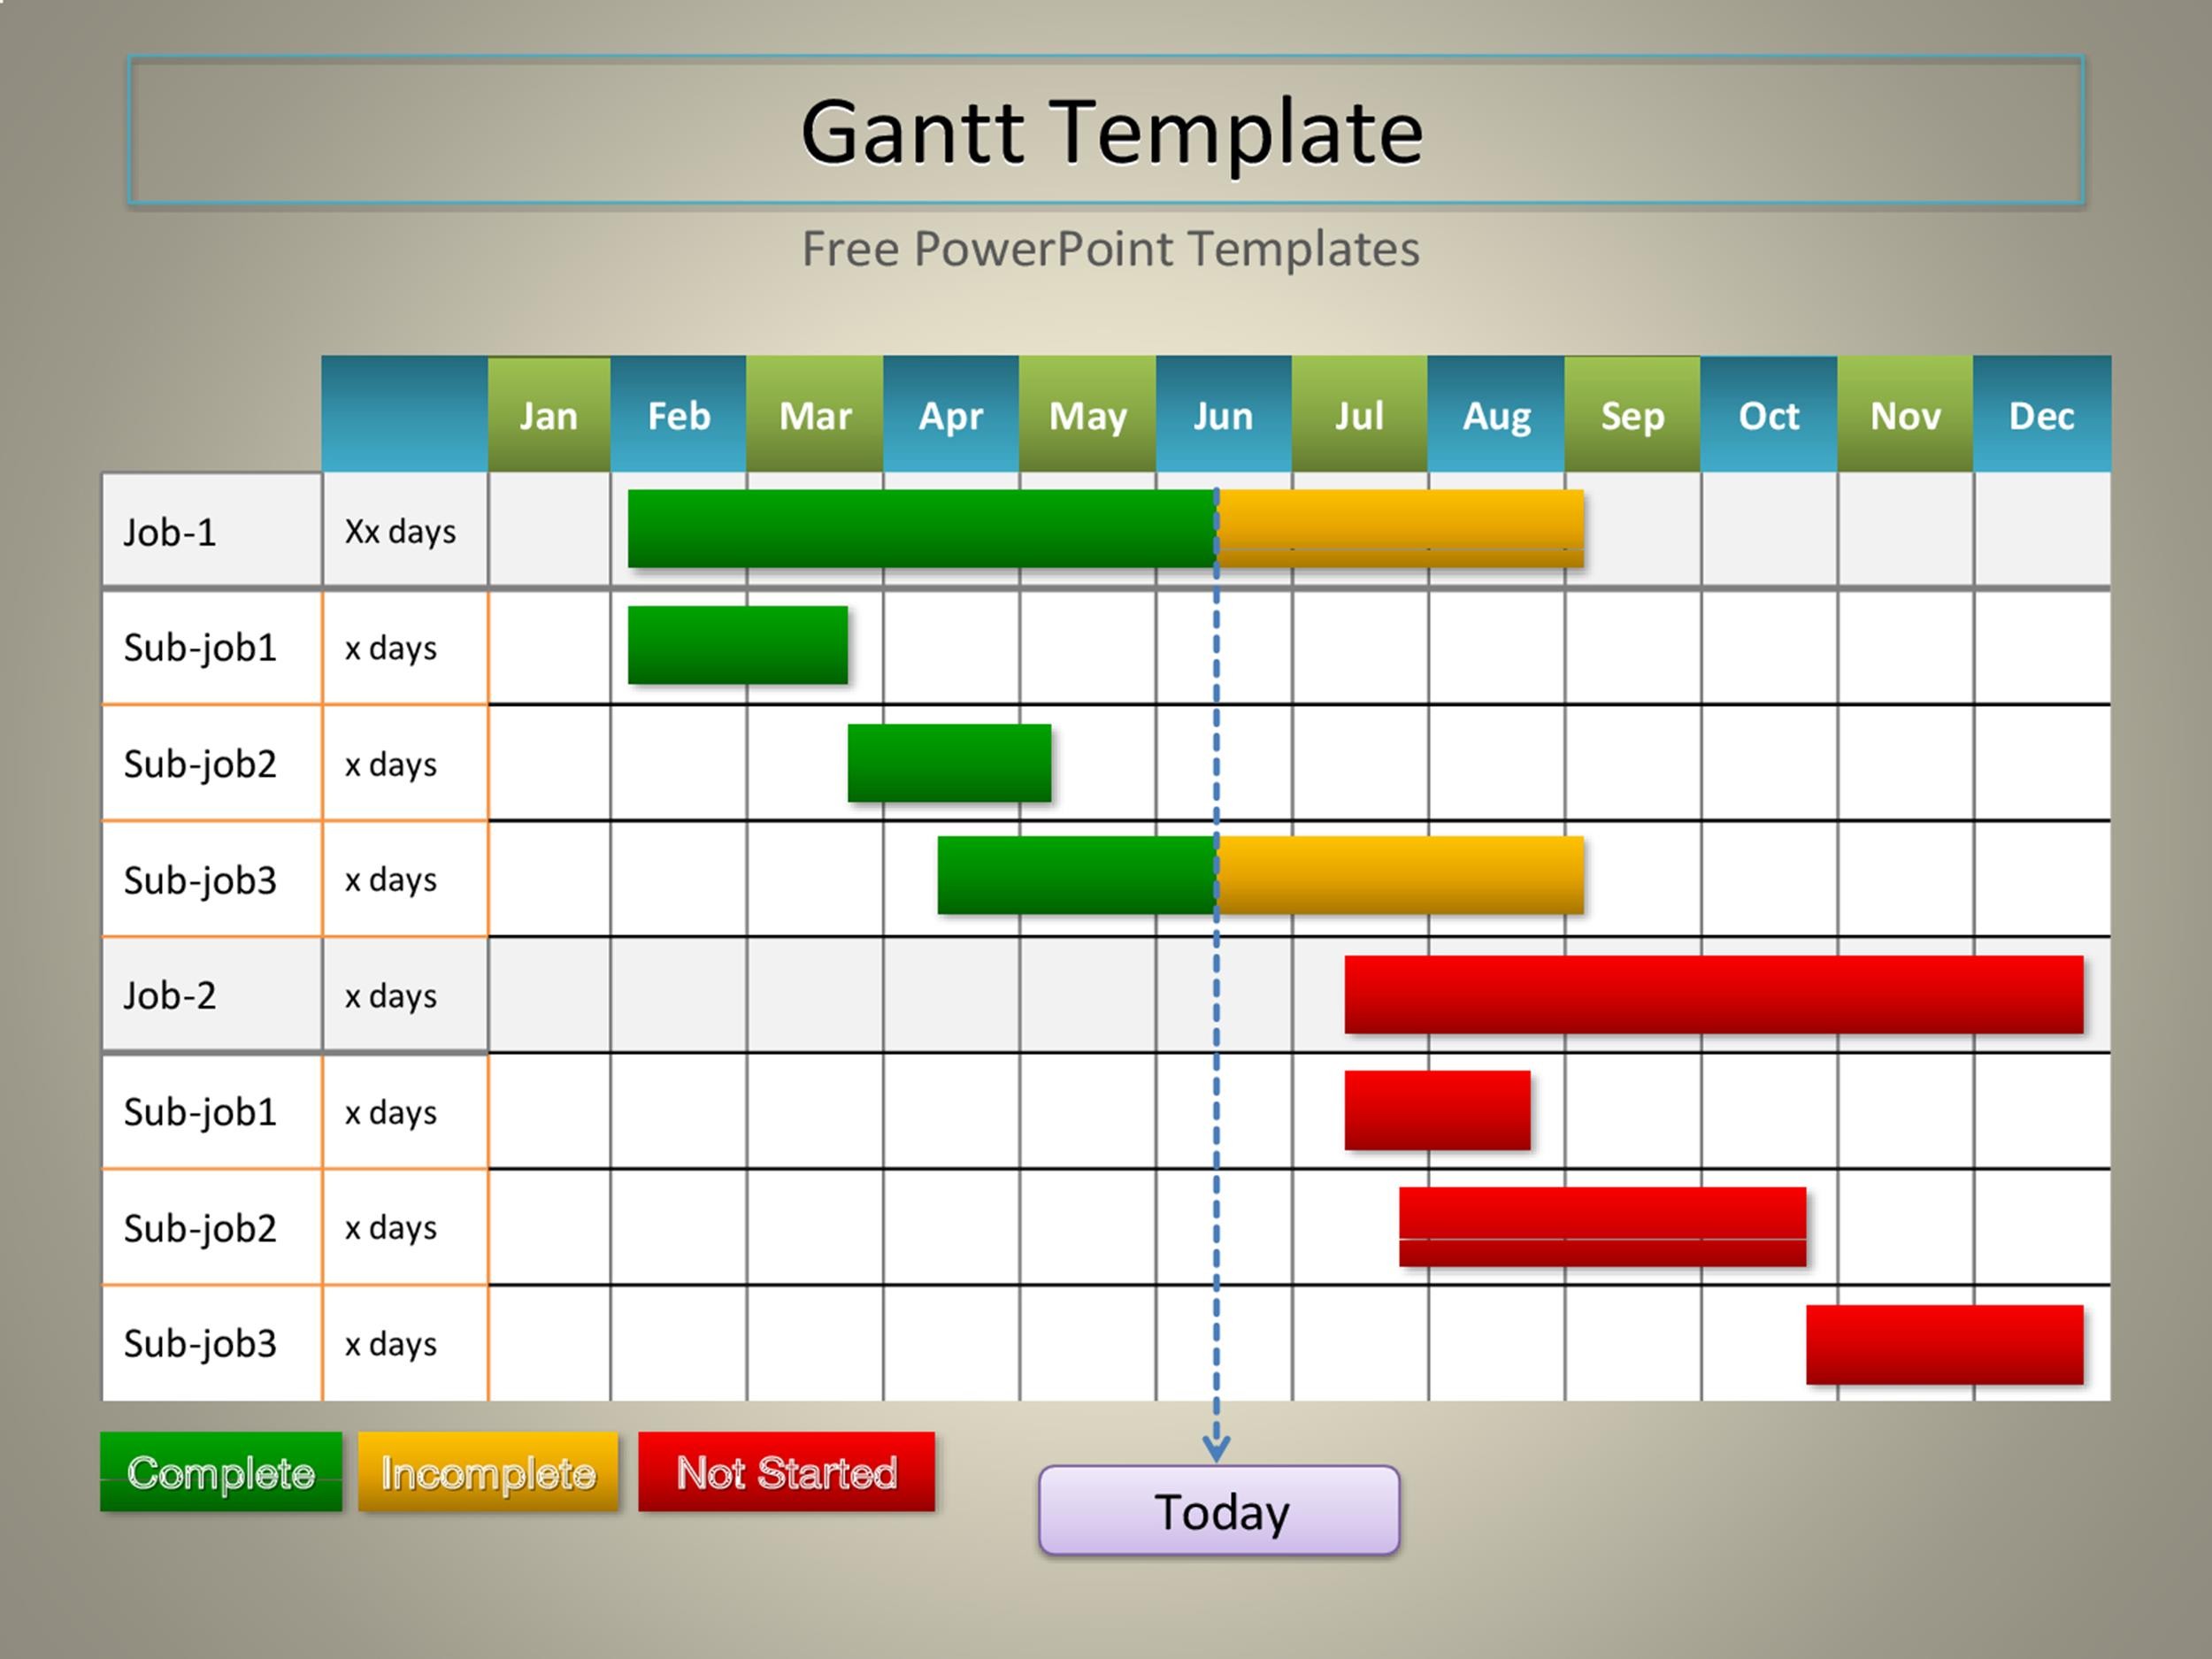 36 Free Gantt Chart Templates (Excel, PowerPoint, Word) ᐅ TemplateLab